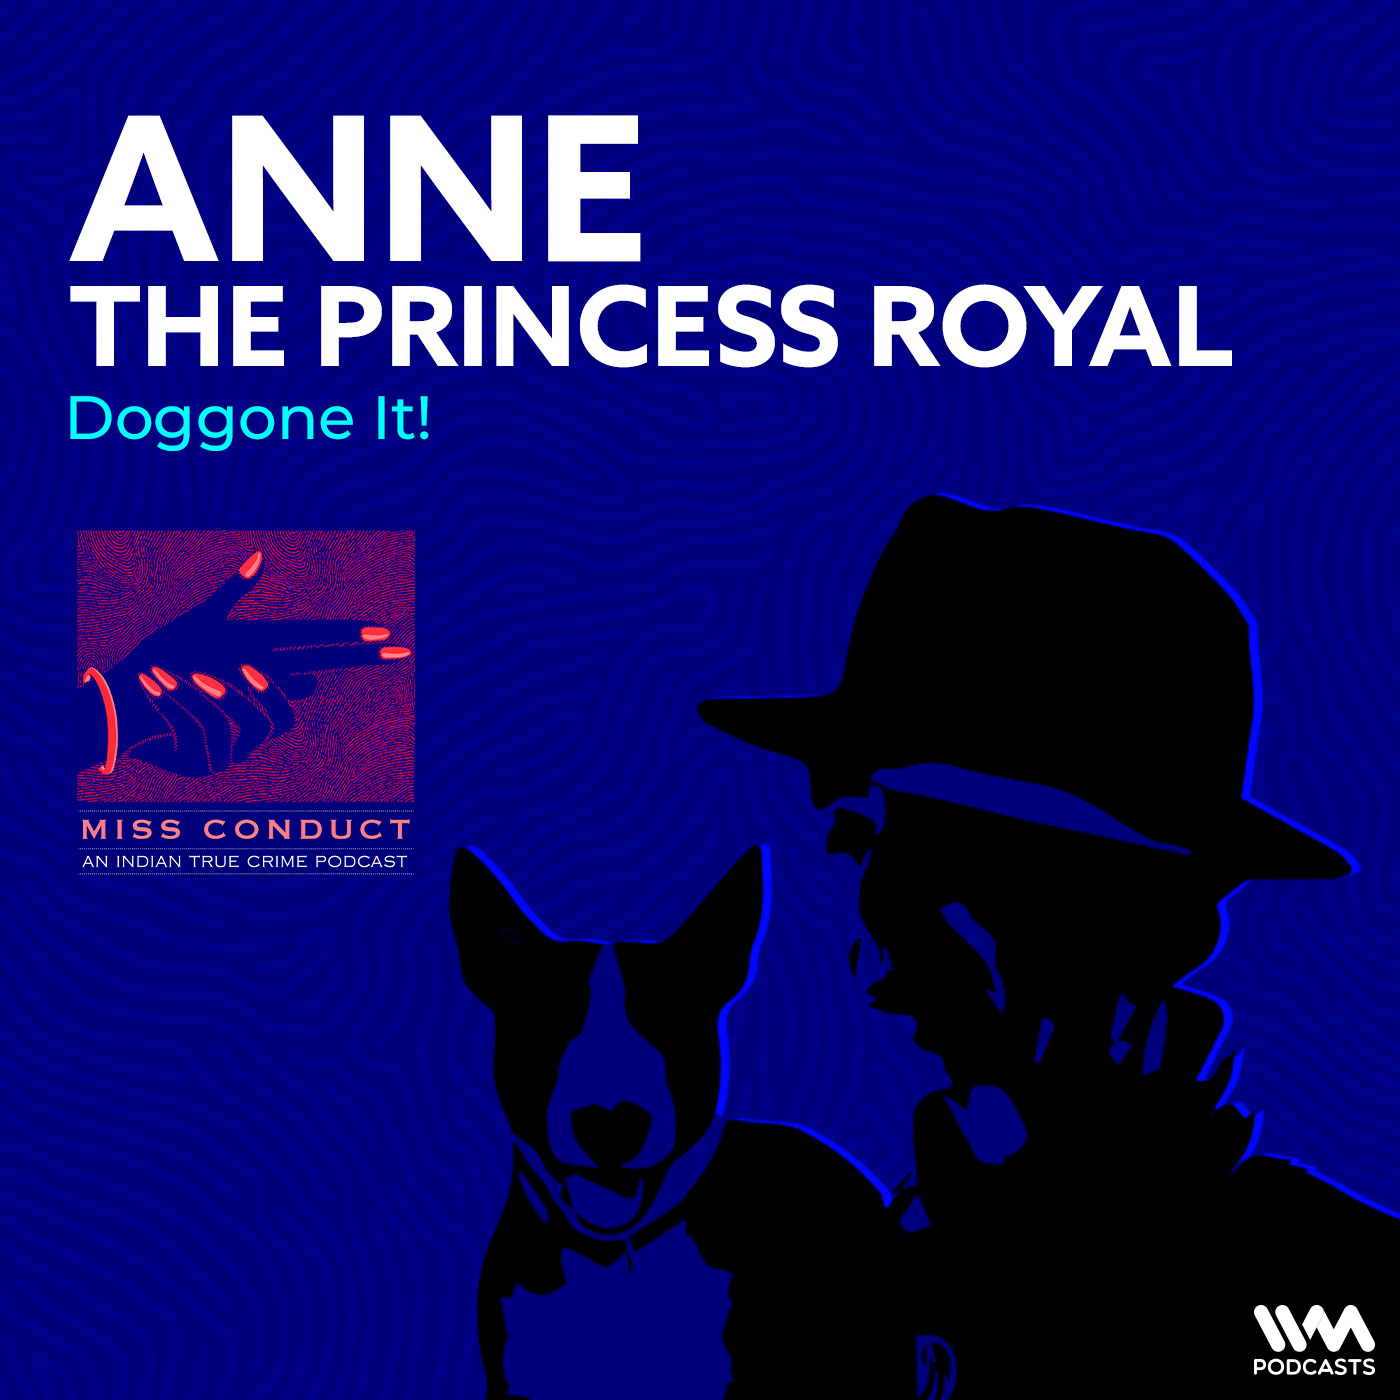 Anne, The Princess Royal